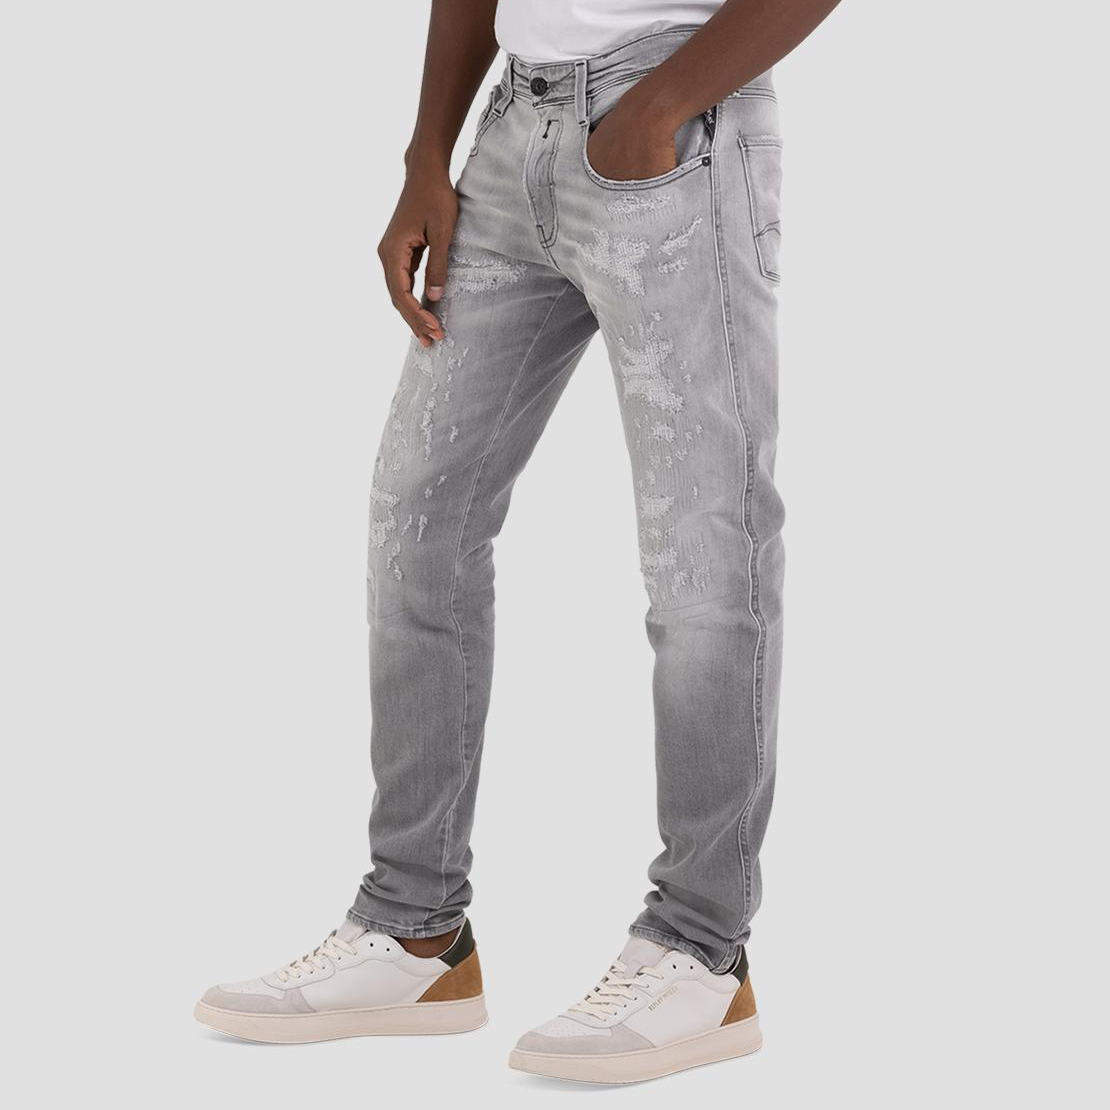 Gotstyle Fashion - Replay Denim Distressed Slim Fit Jean - Light Grey